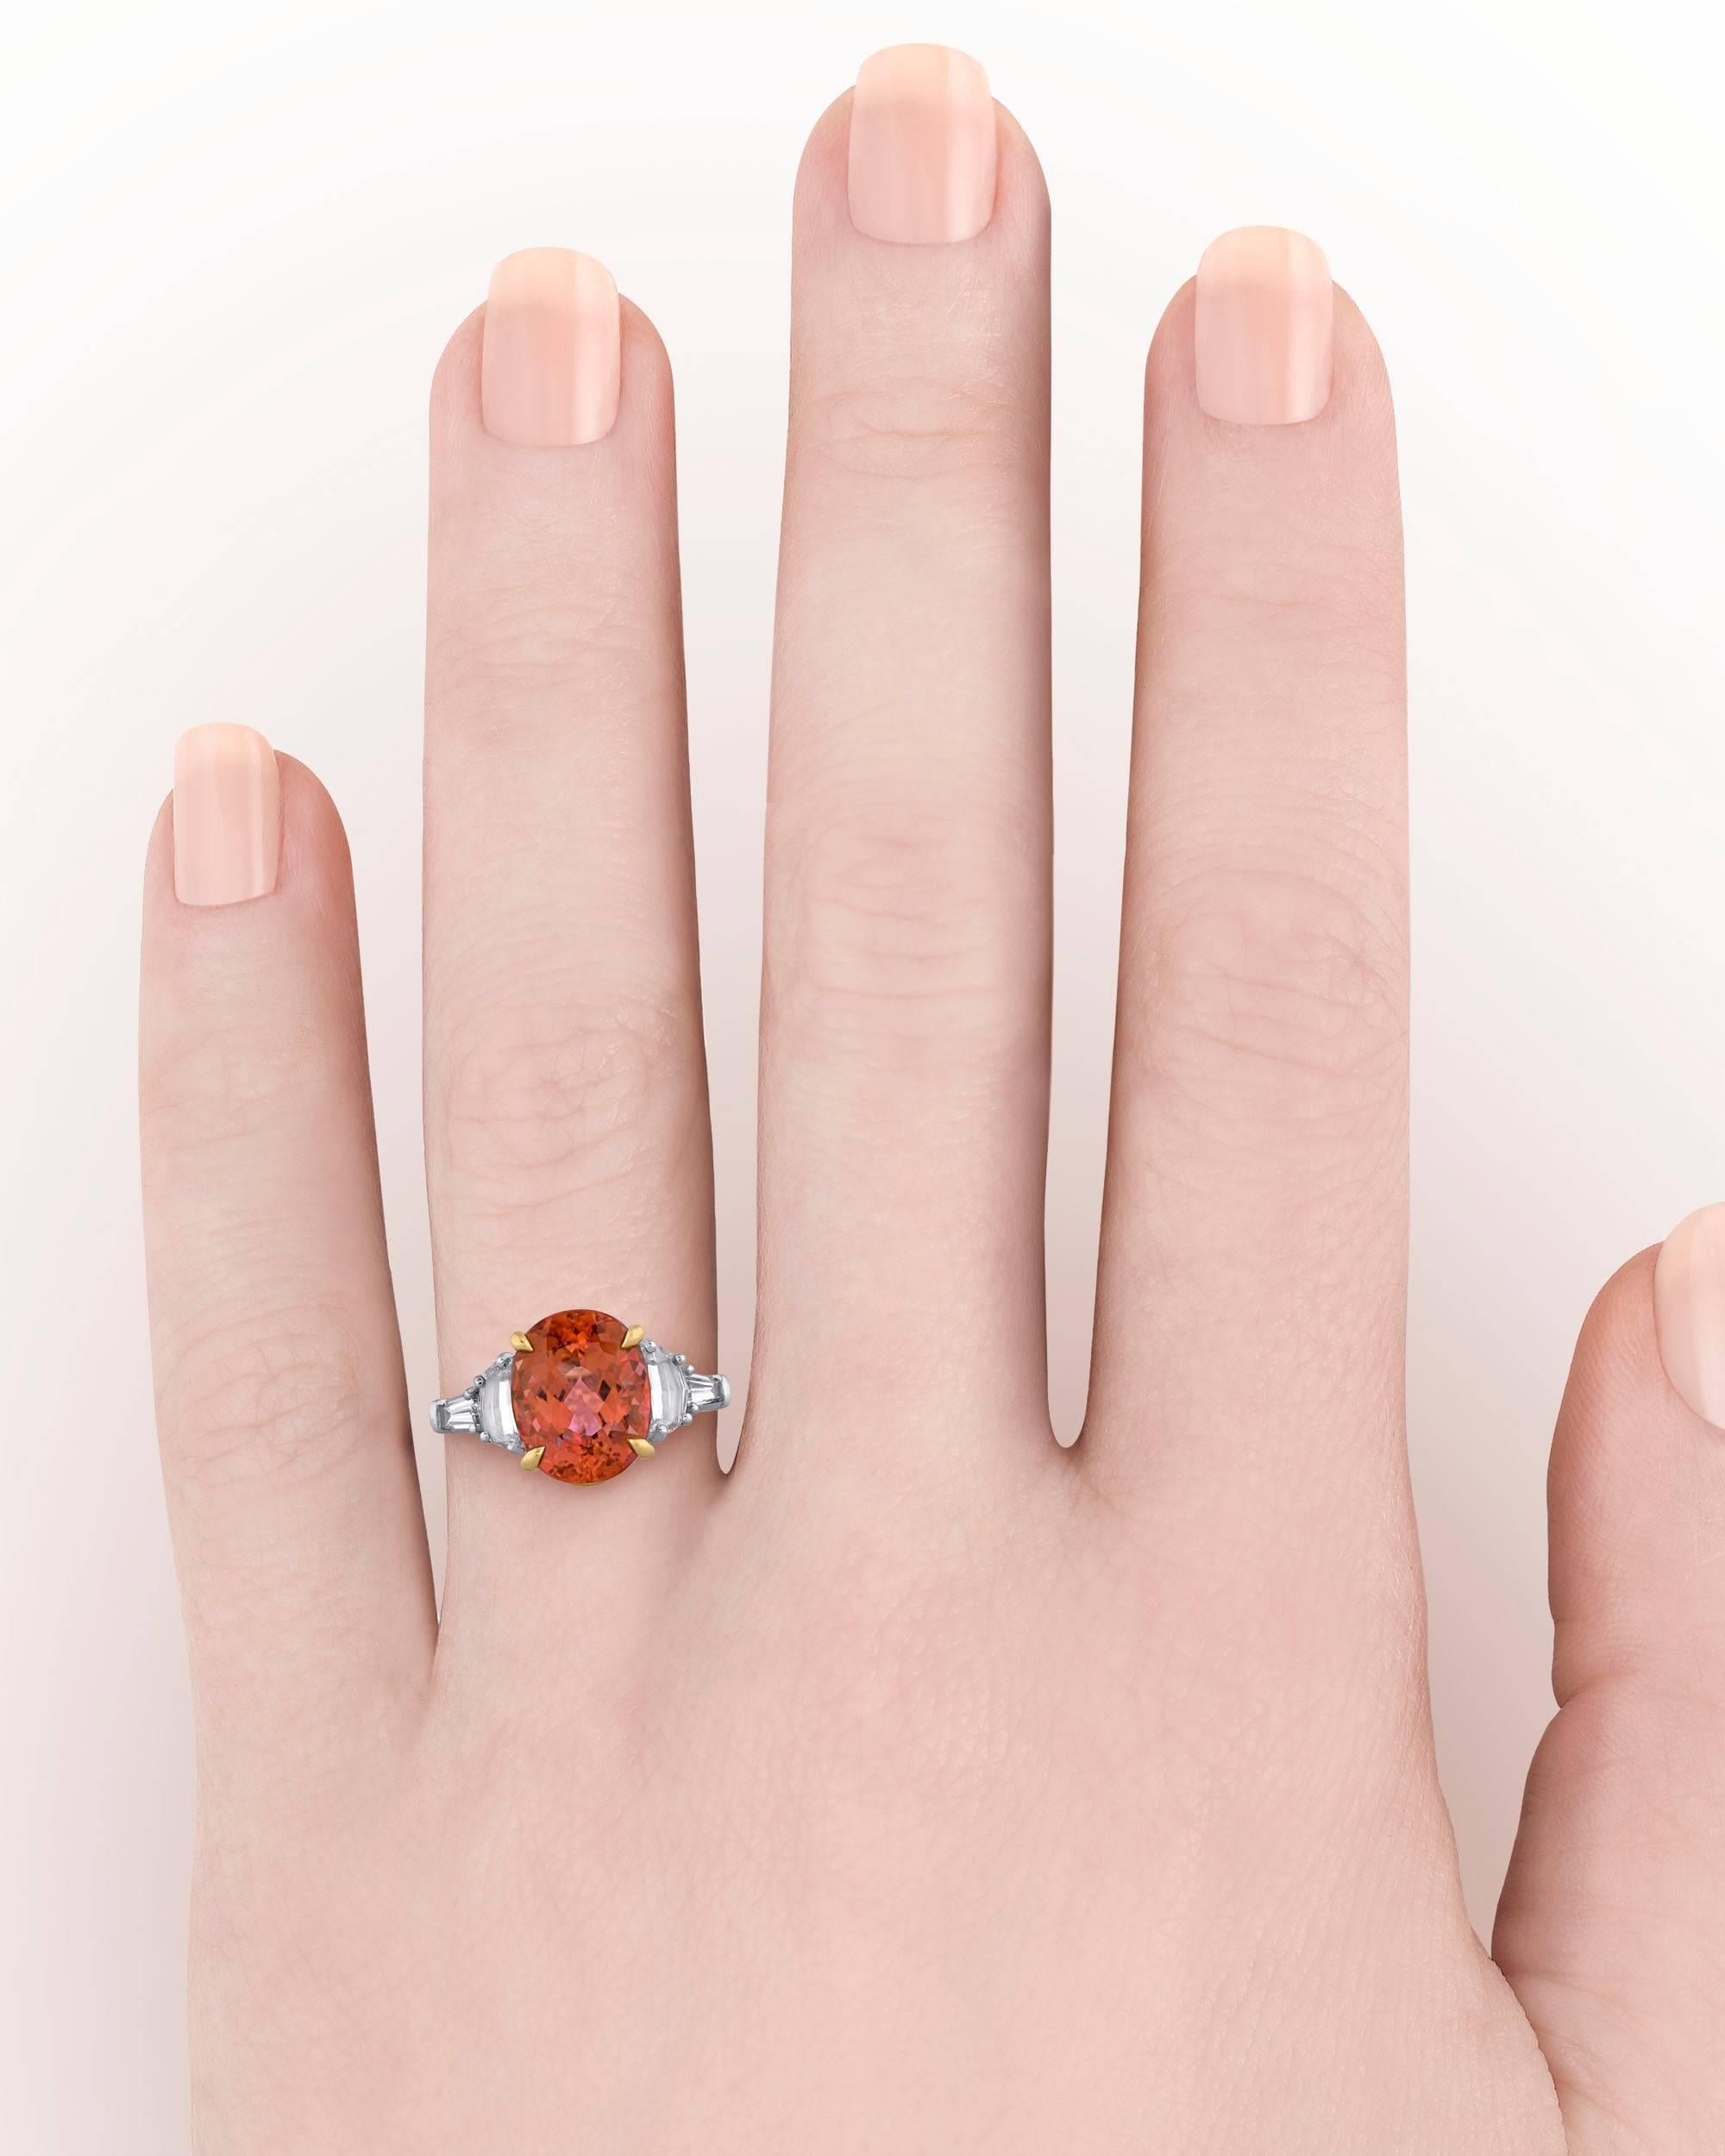 Women's Pinkish-Orange Topaz and Diamond Ring by Tiffany & Co.